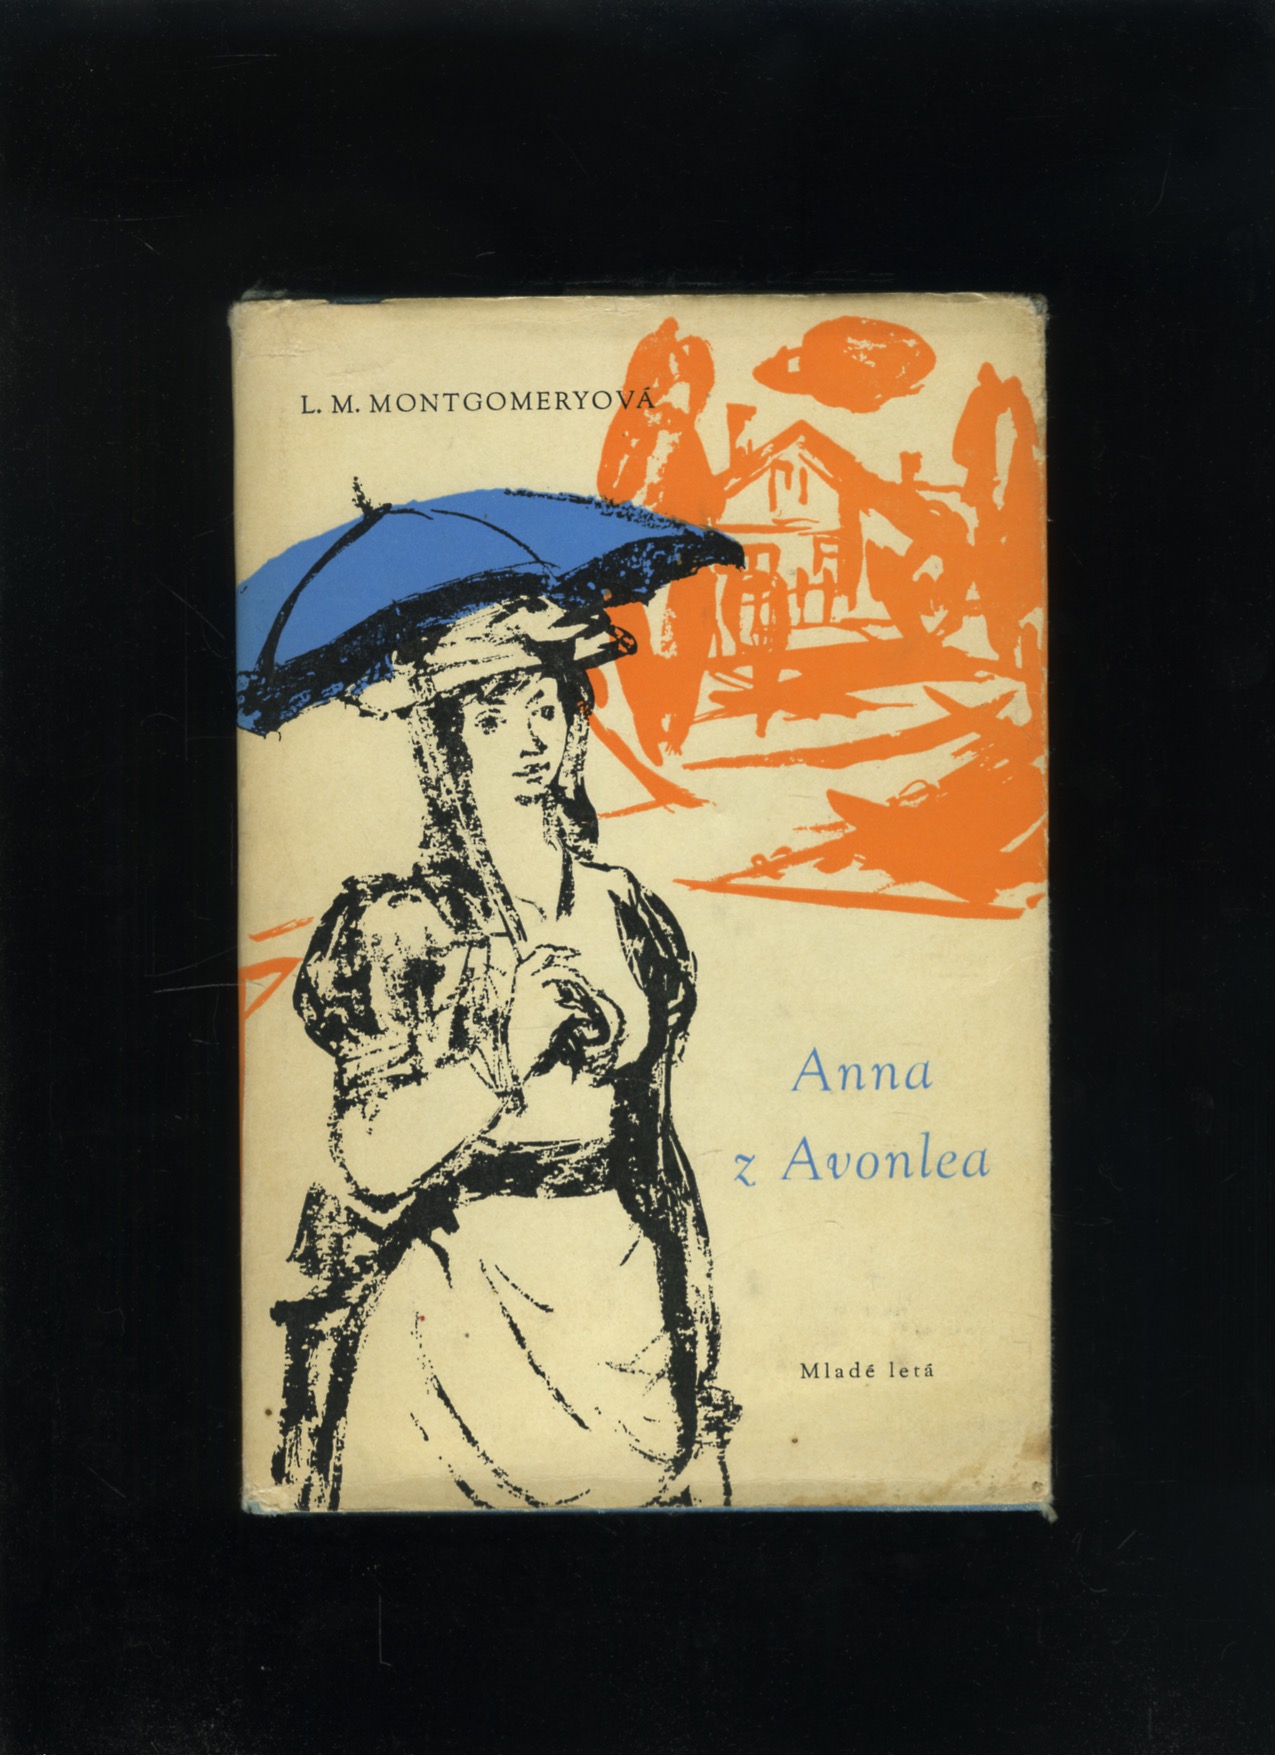 Anna z Avonlea (Lucy Maud Montgomery)